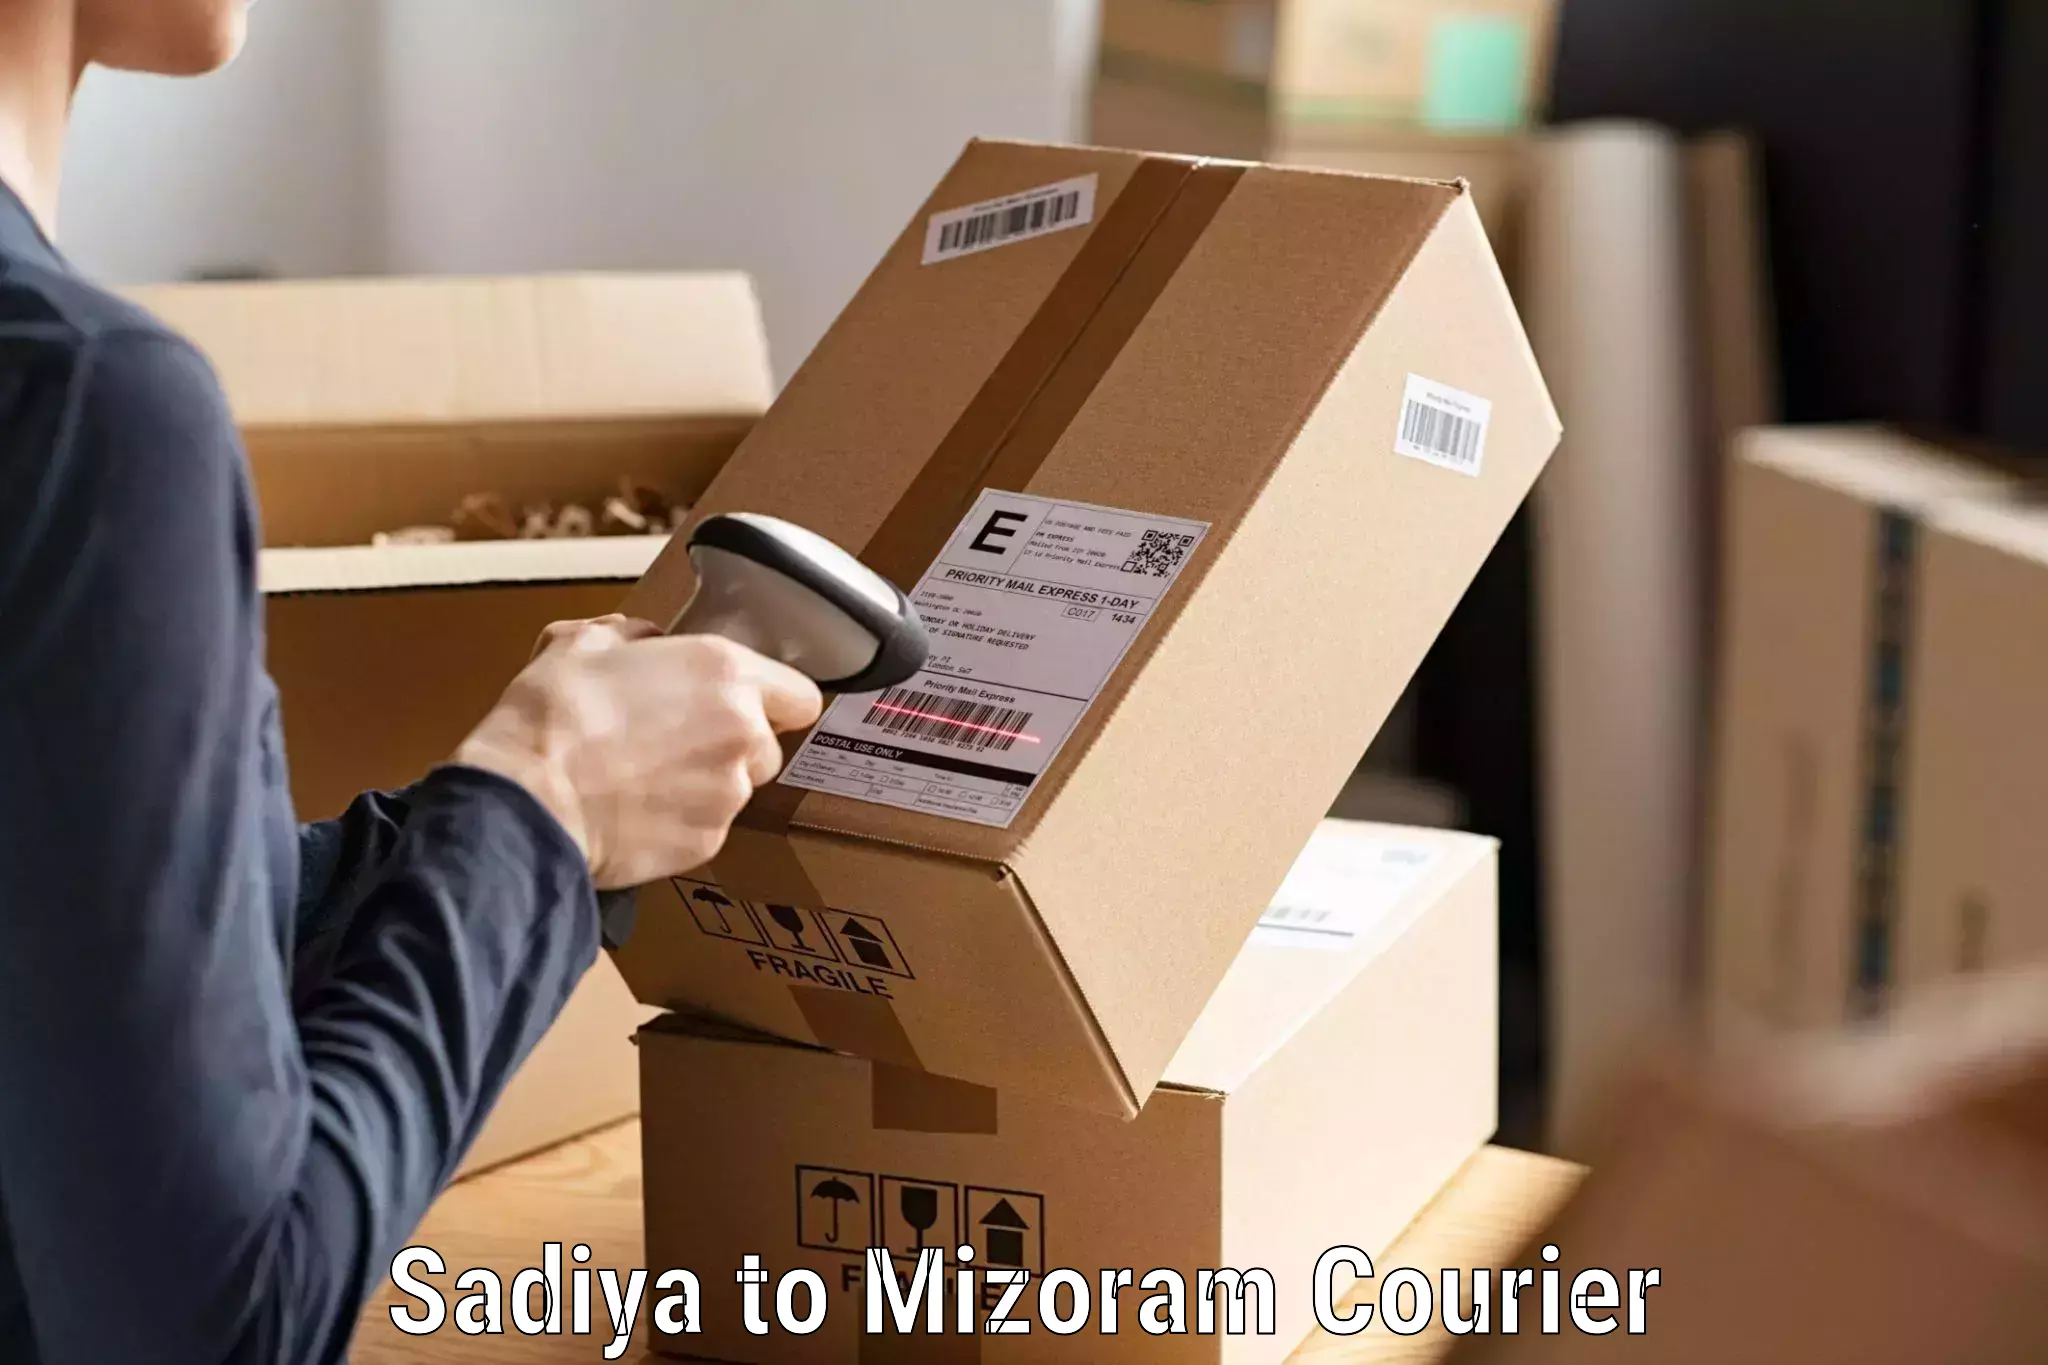 Courier service comparison Sadiya to Saiha